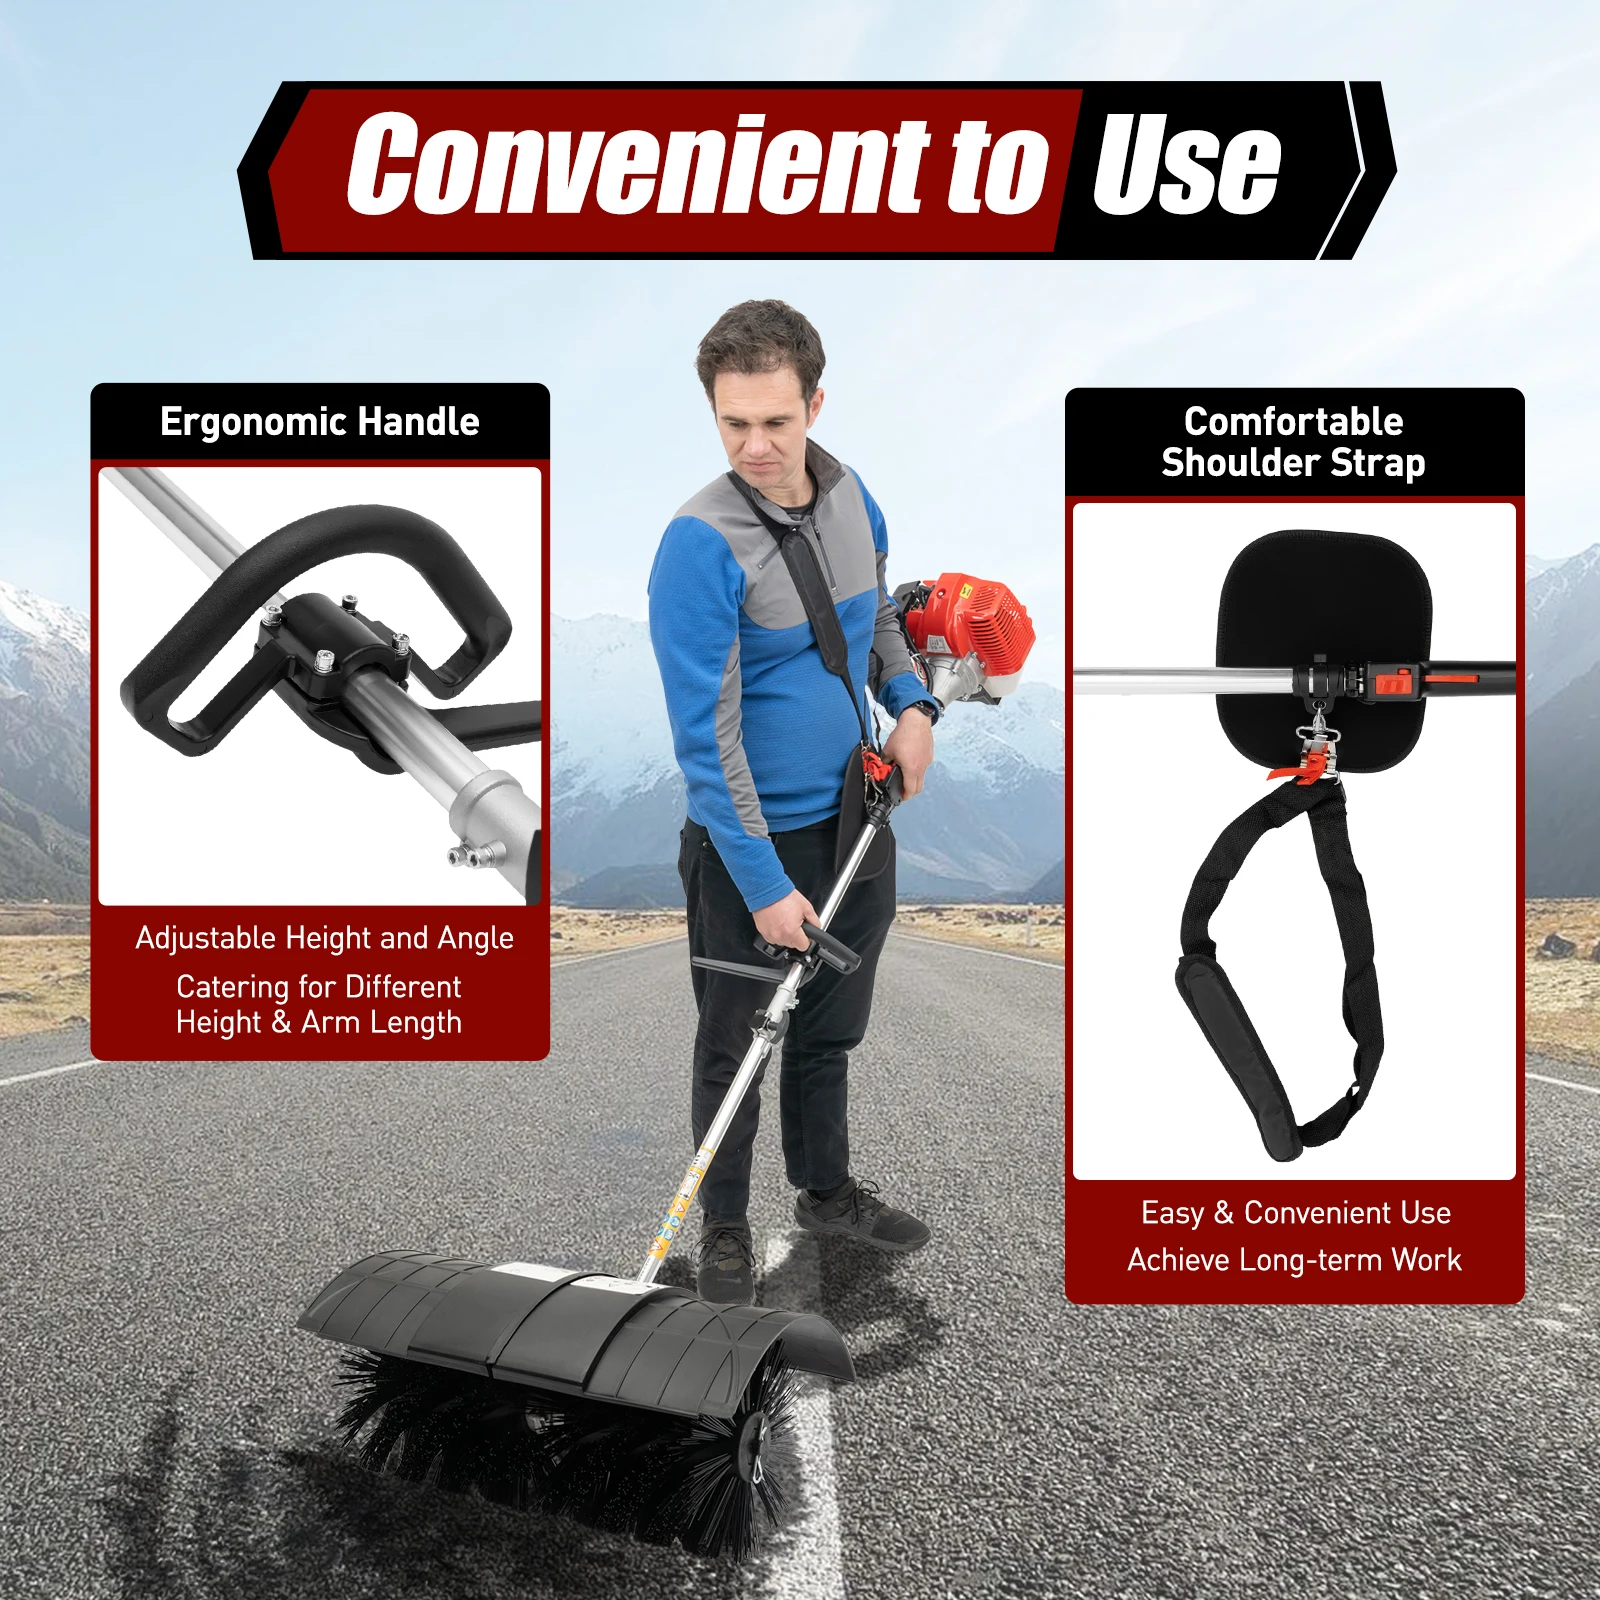 Yiyibyus 2.3 HP Powerful Handheld Cleaning Sweeper Power Lawn Sweeper